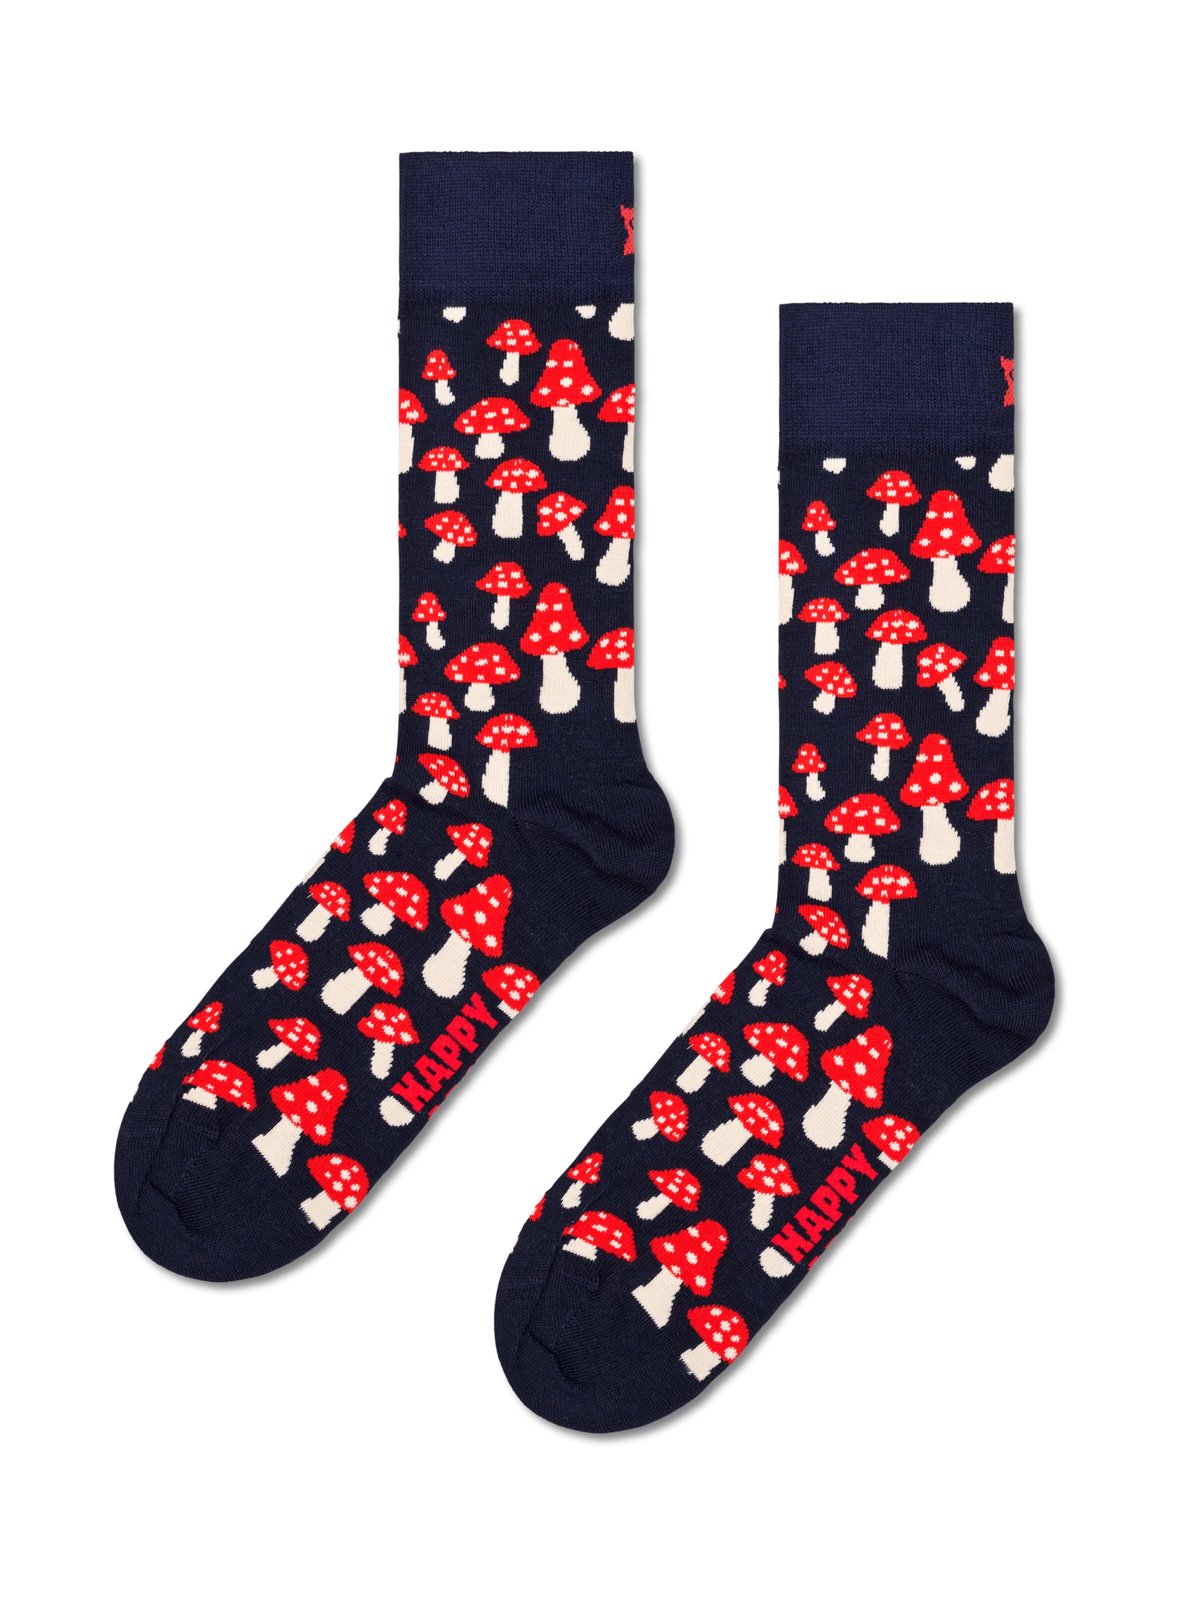 Happy Socks Socken mit Fliegenpilz-Motiv